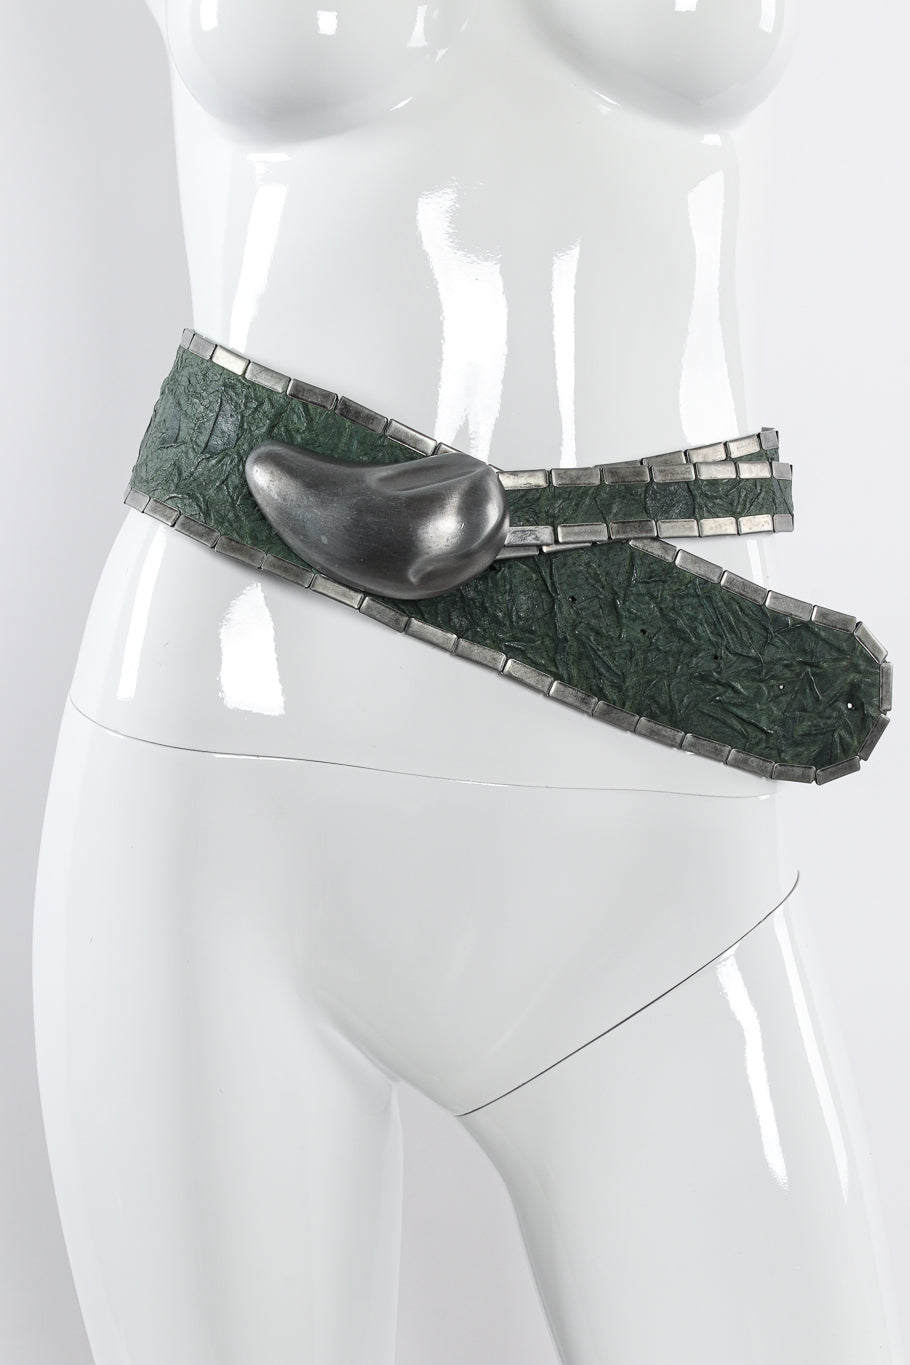 distressed leather wrap belt by Spira mannequin @recessla